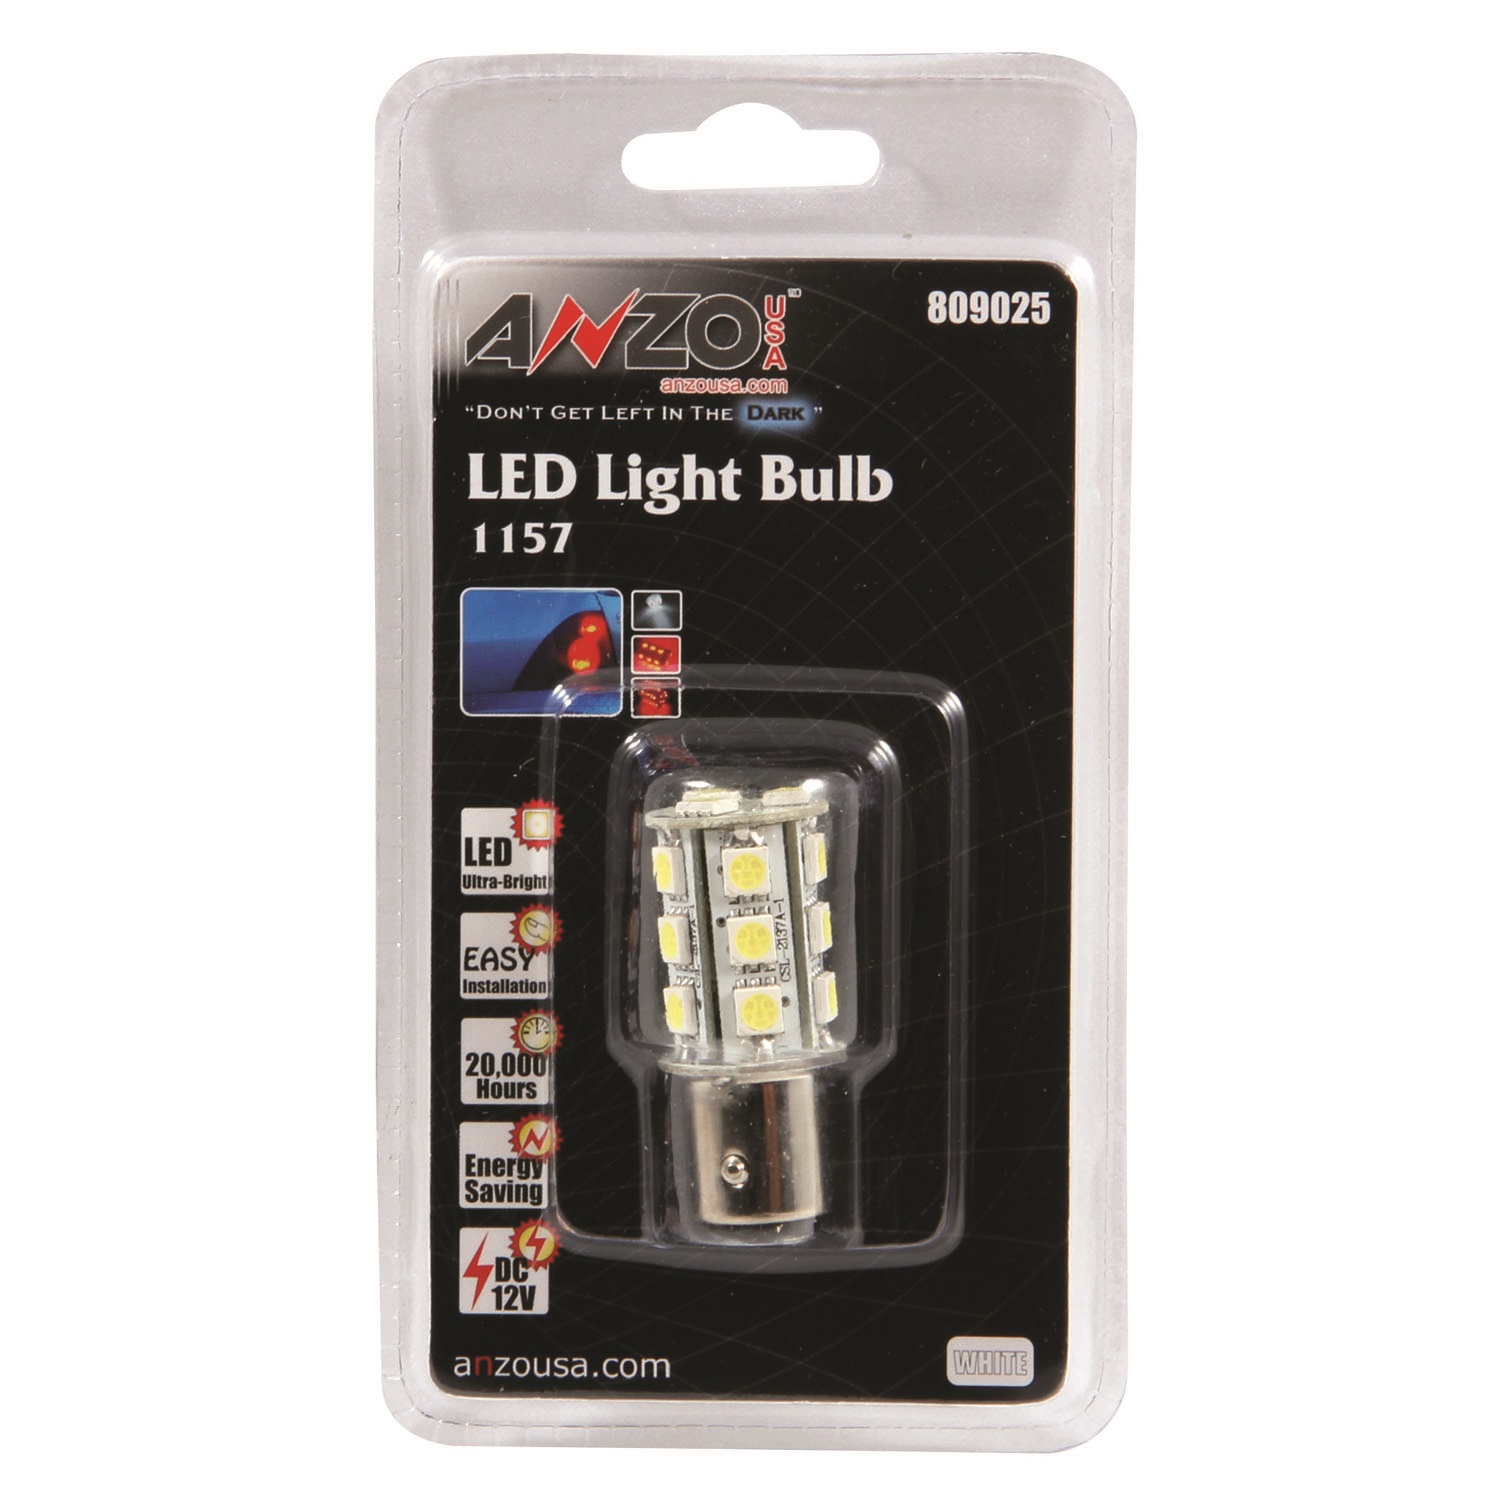 Anzo USA Anzo USA 809025 LED Replacement Bulb